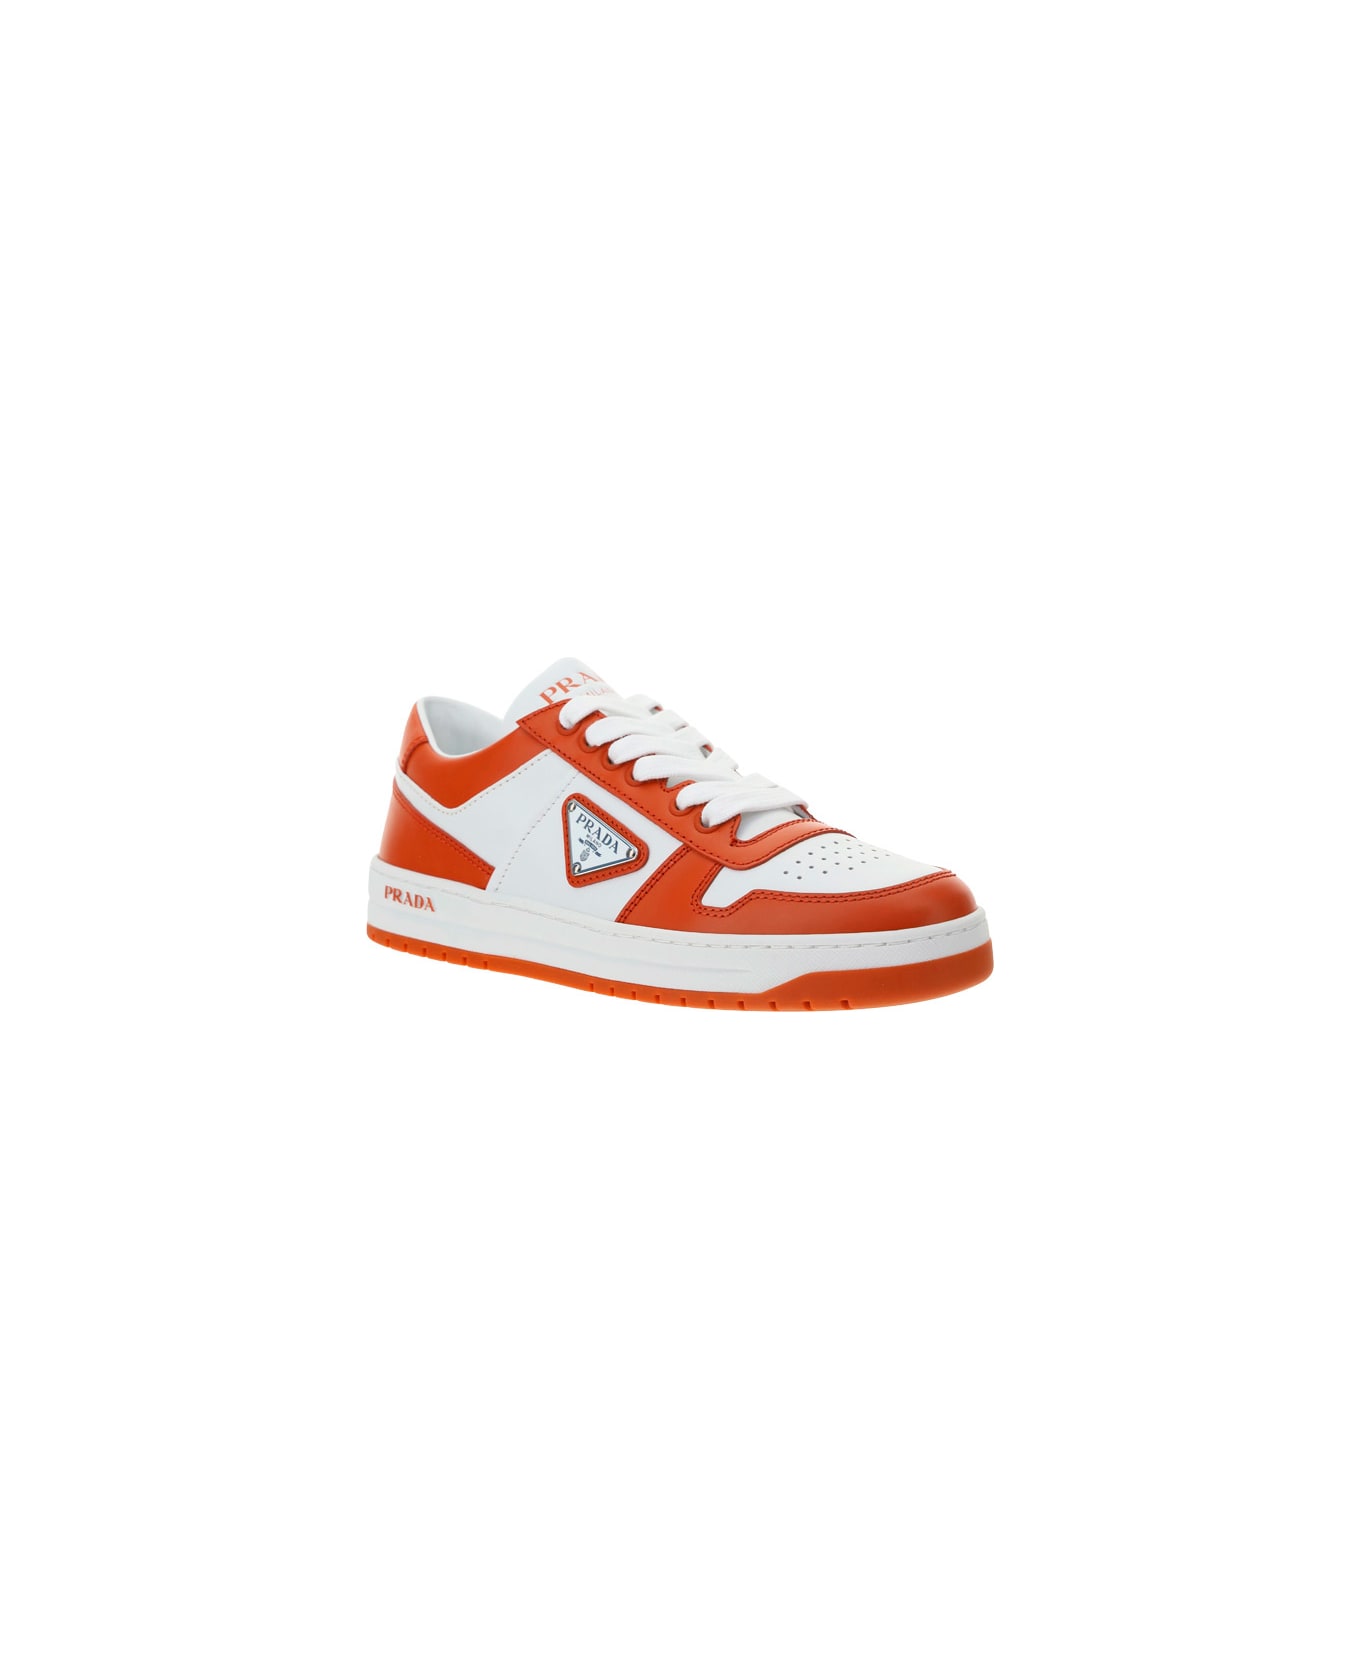 Prada Sneakers - Bianco+arancio